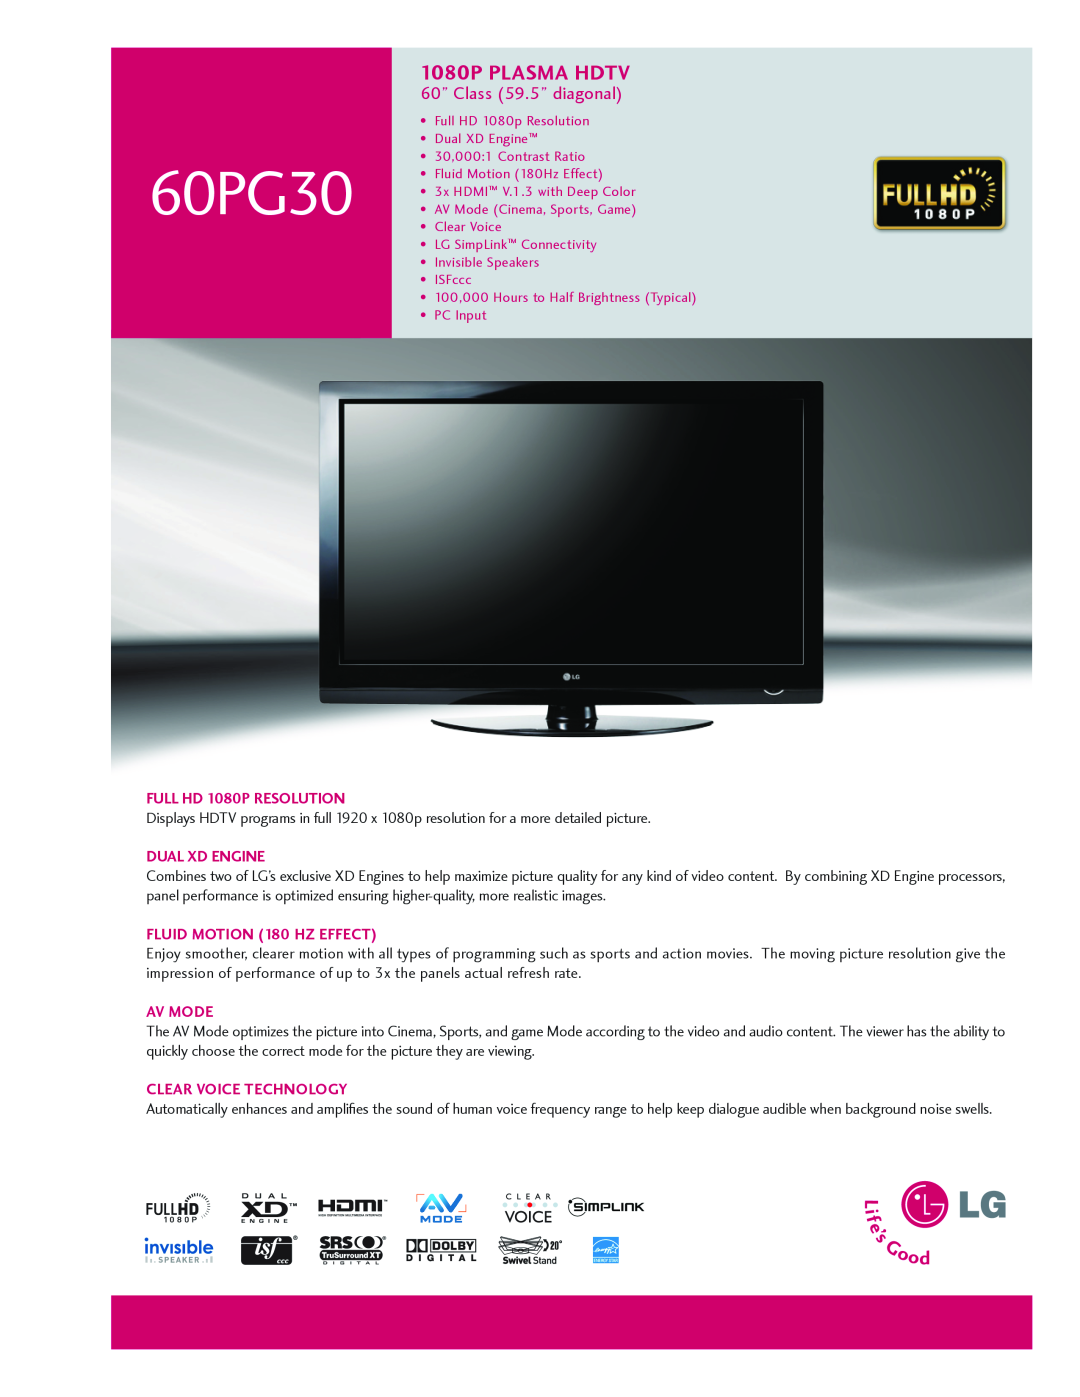 LG Electronics 60PG30 manual 1080P PLASMA HDTV 60” Class 59.5” diagonal, Full HD 1080p Resolution, Dual Xd Engine, Av Mode 